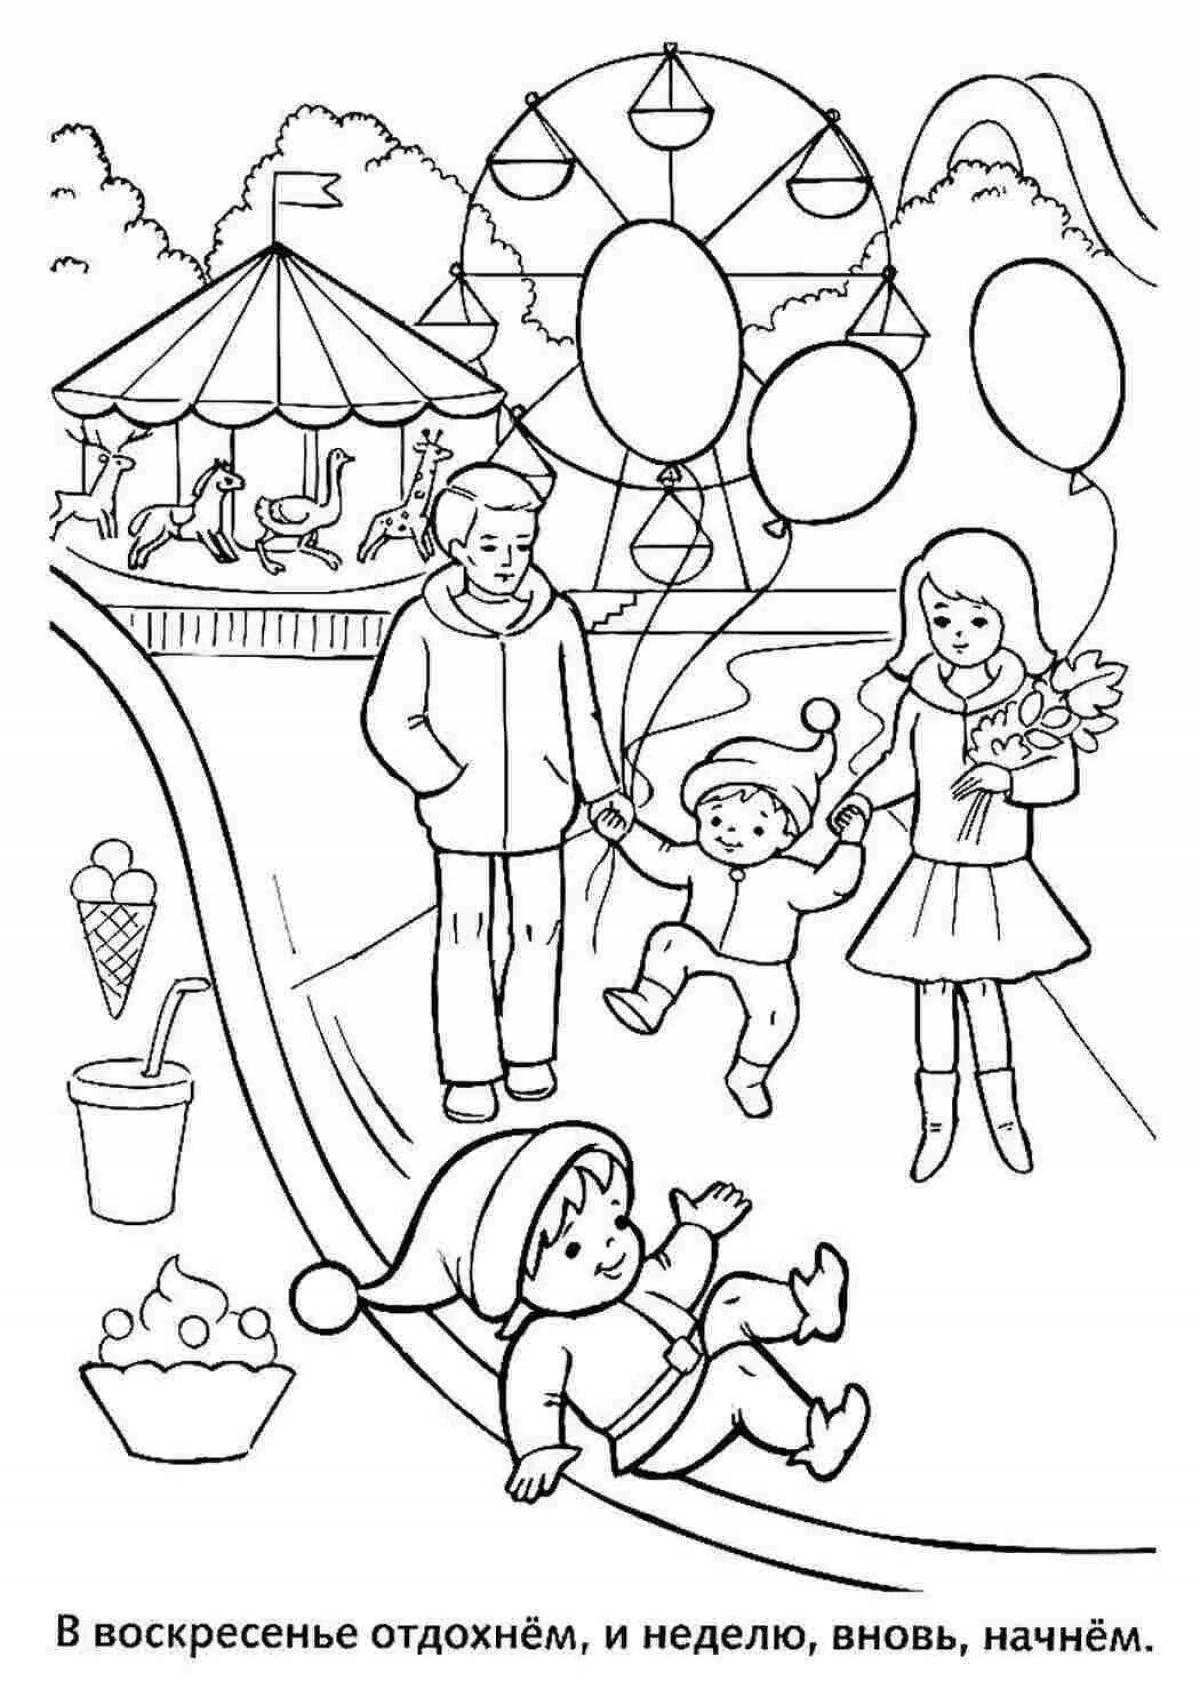 Magic family coloring book